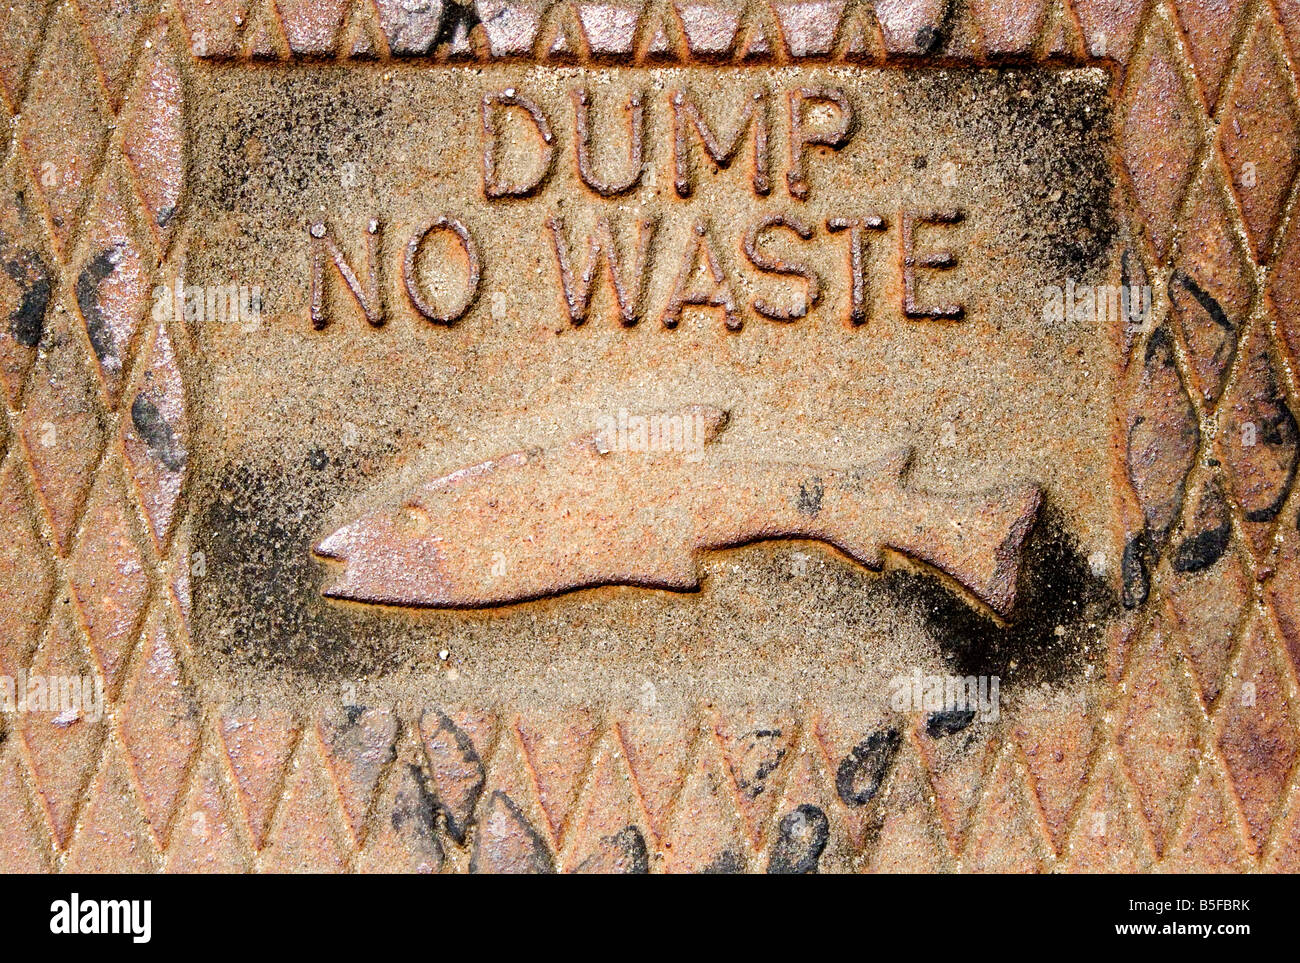 Dump No Waste sign on sidewalk Stock Photo